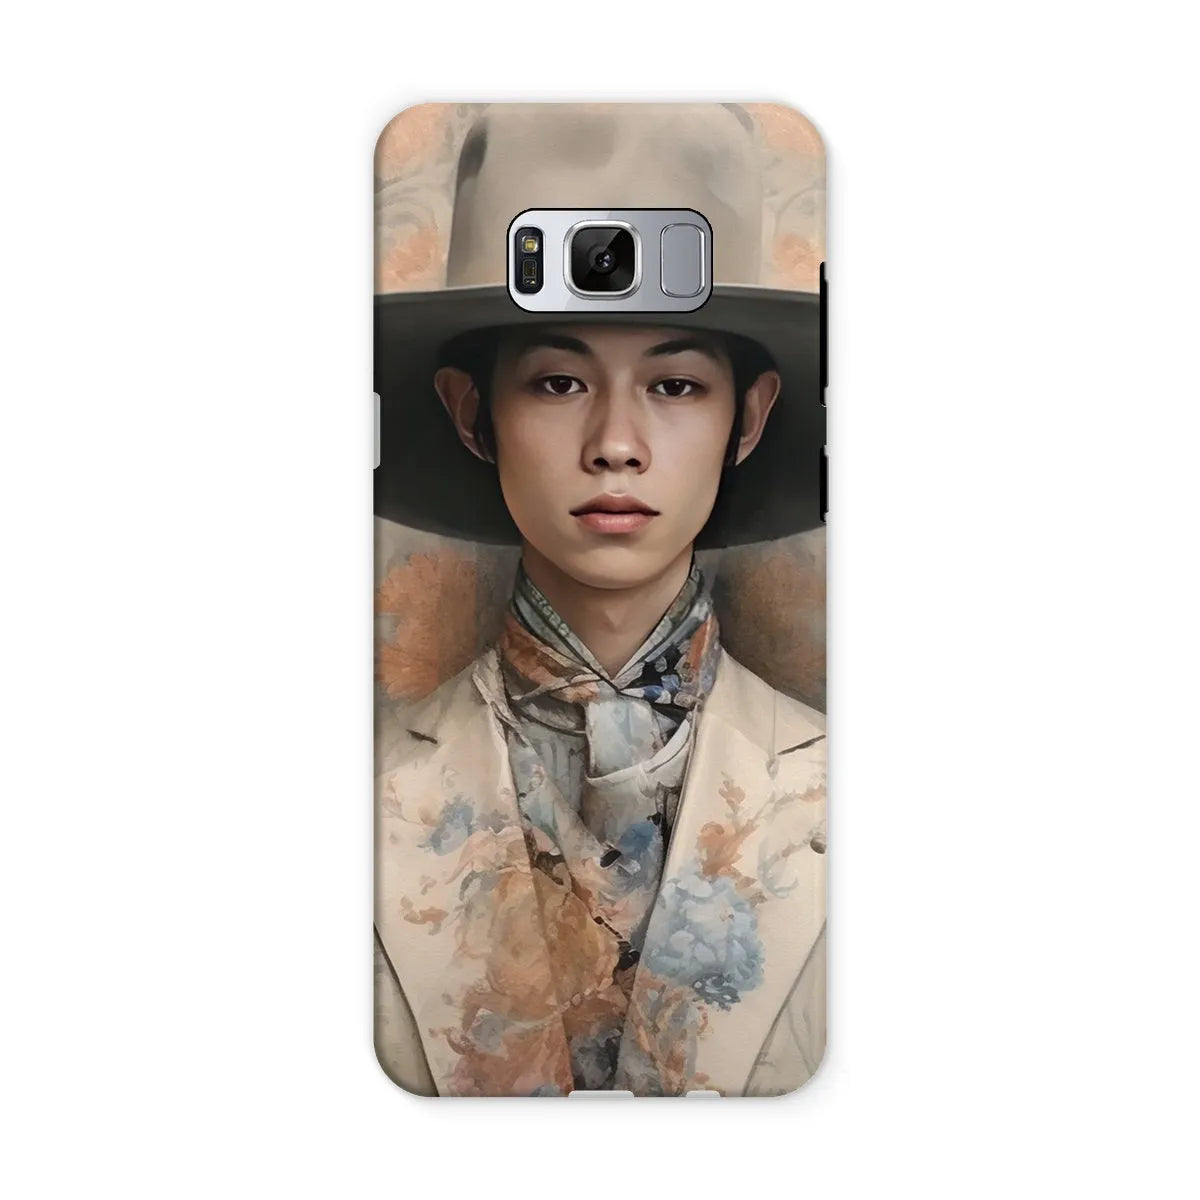 Thuanthong The Transgender Cowboy - Thai F2m Art Phone Case - Samsung Galaxy S8 / Matte - Mobile Phone Cases